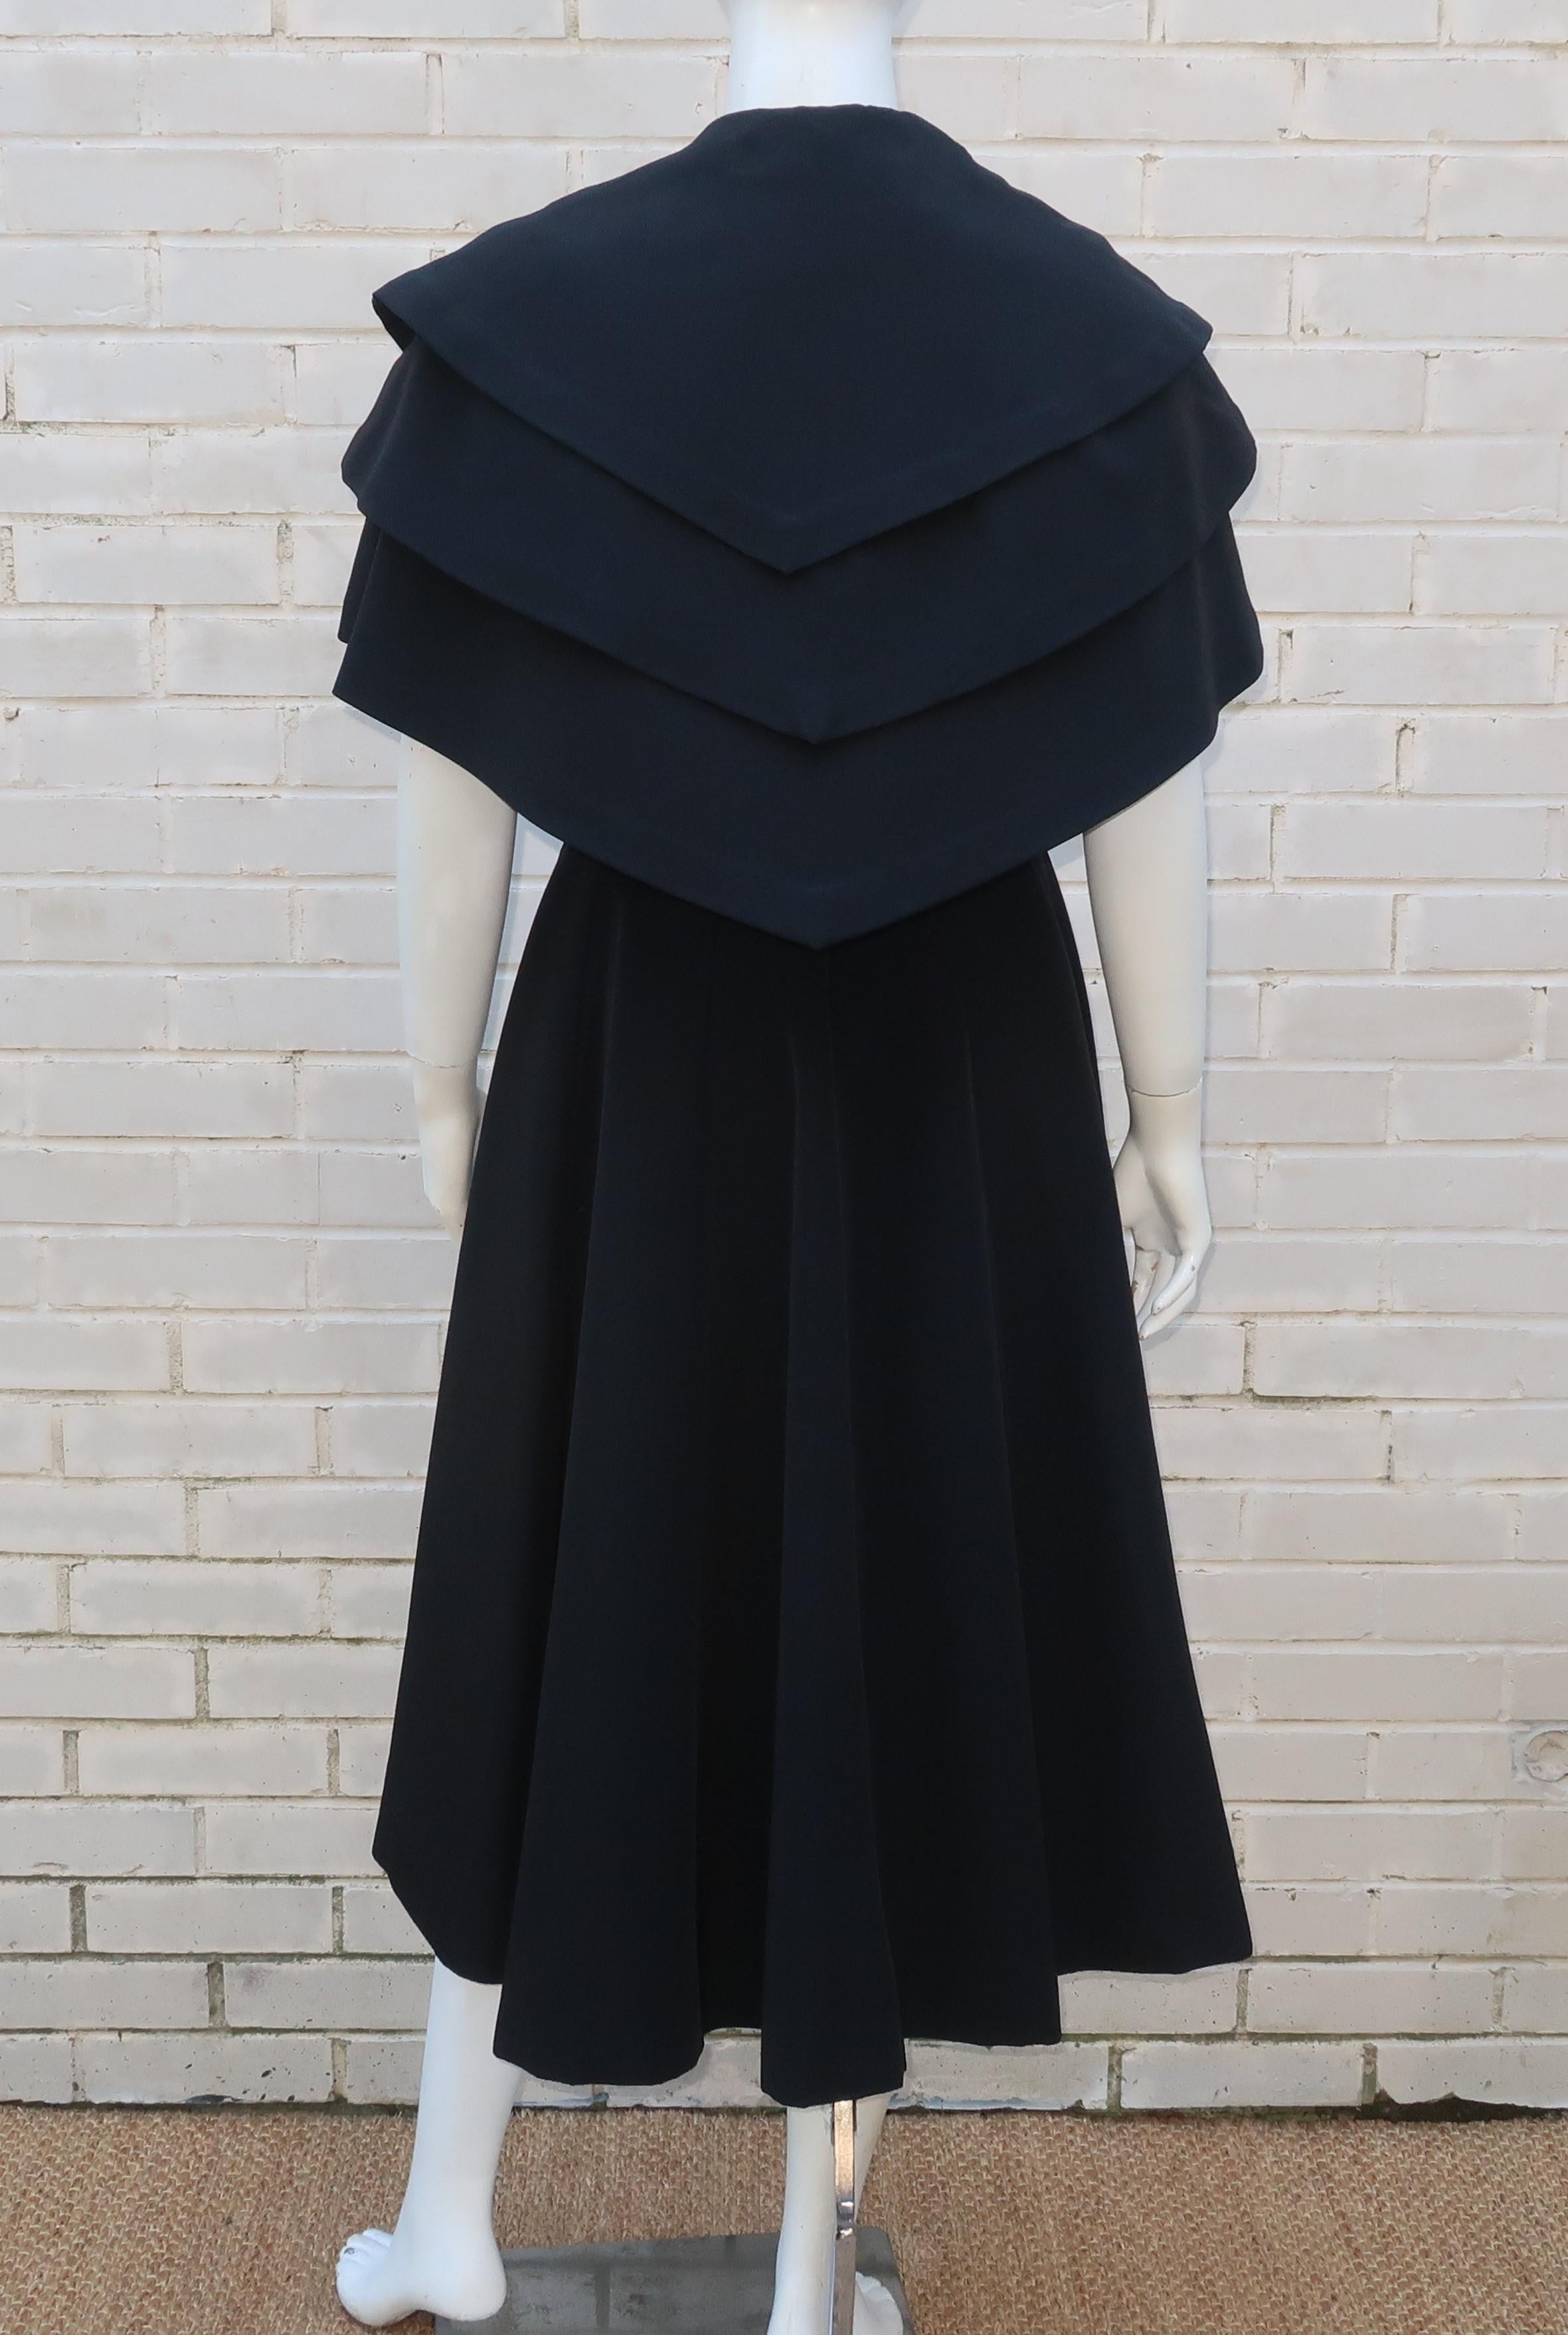 Bonwit Teller 'New Look' Black Silk Faille Evening Coat Dress, C.1950 2